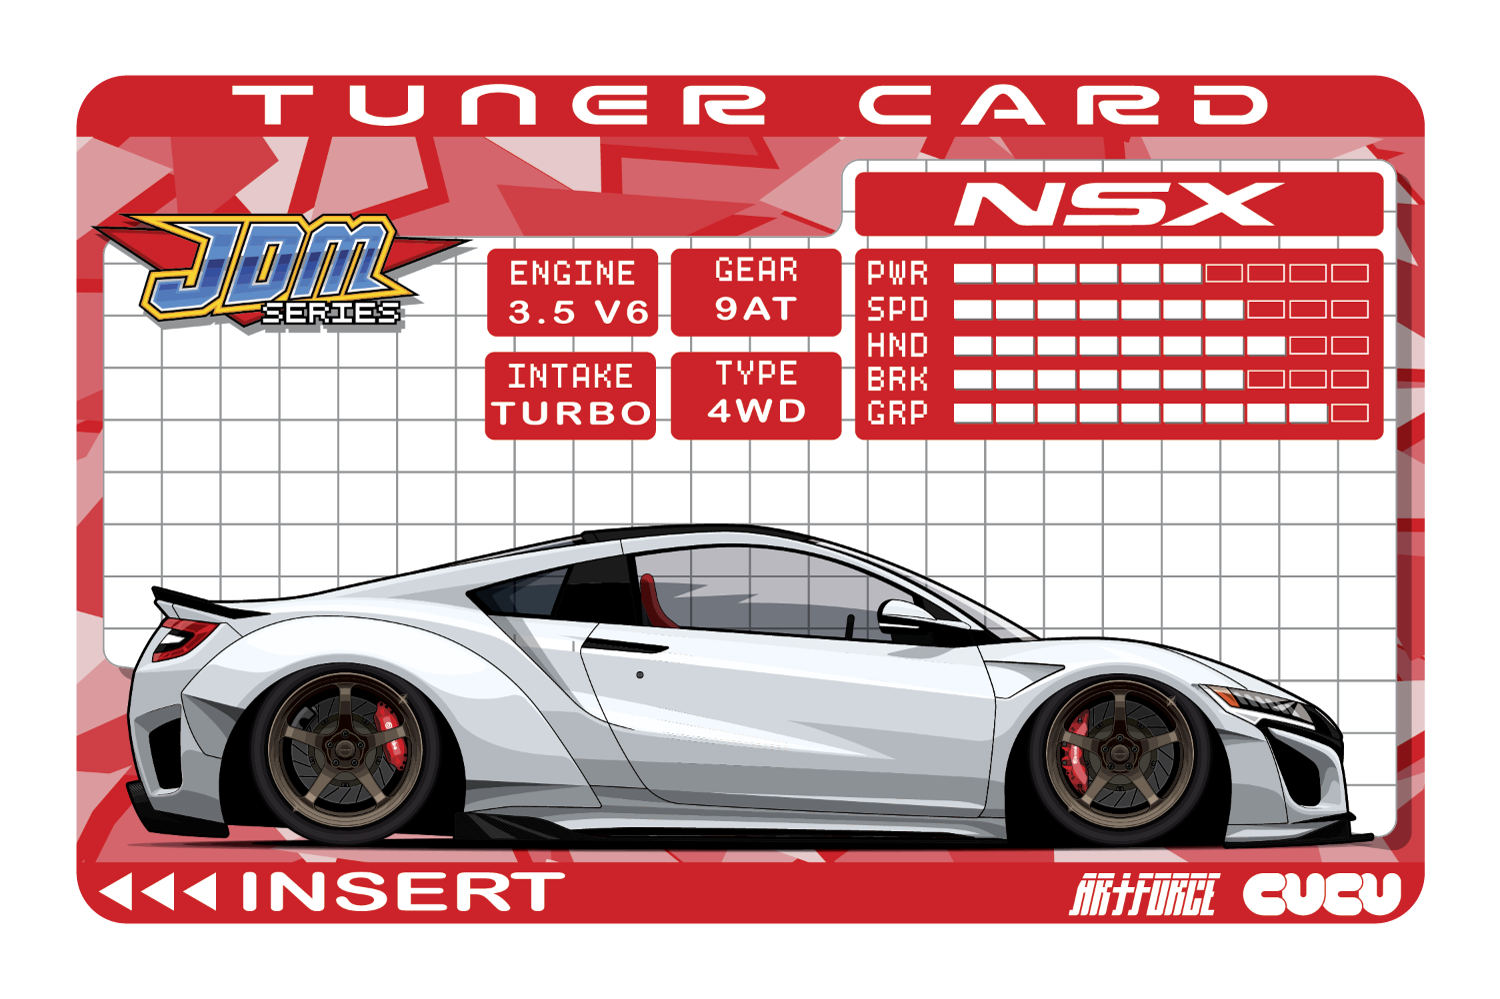 NC1 NSX Tuner Card